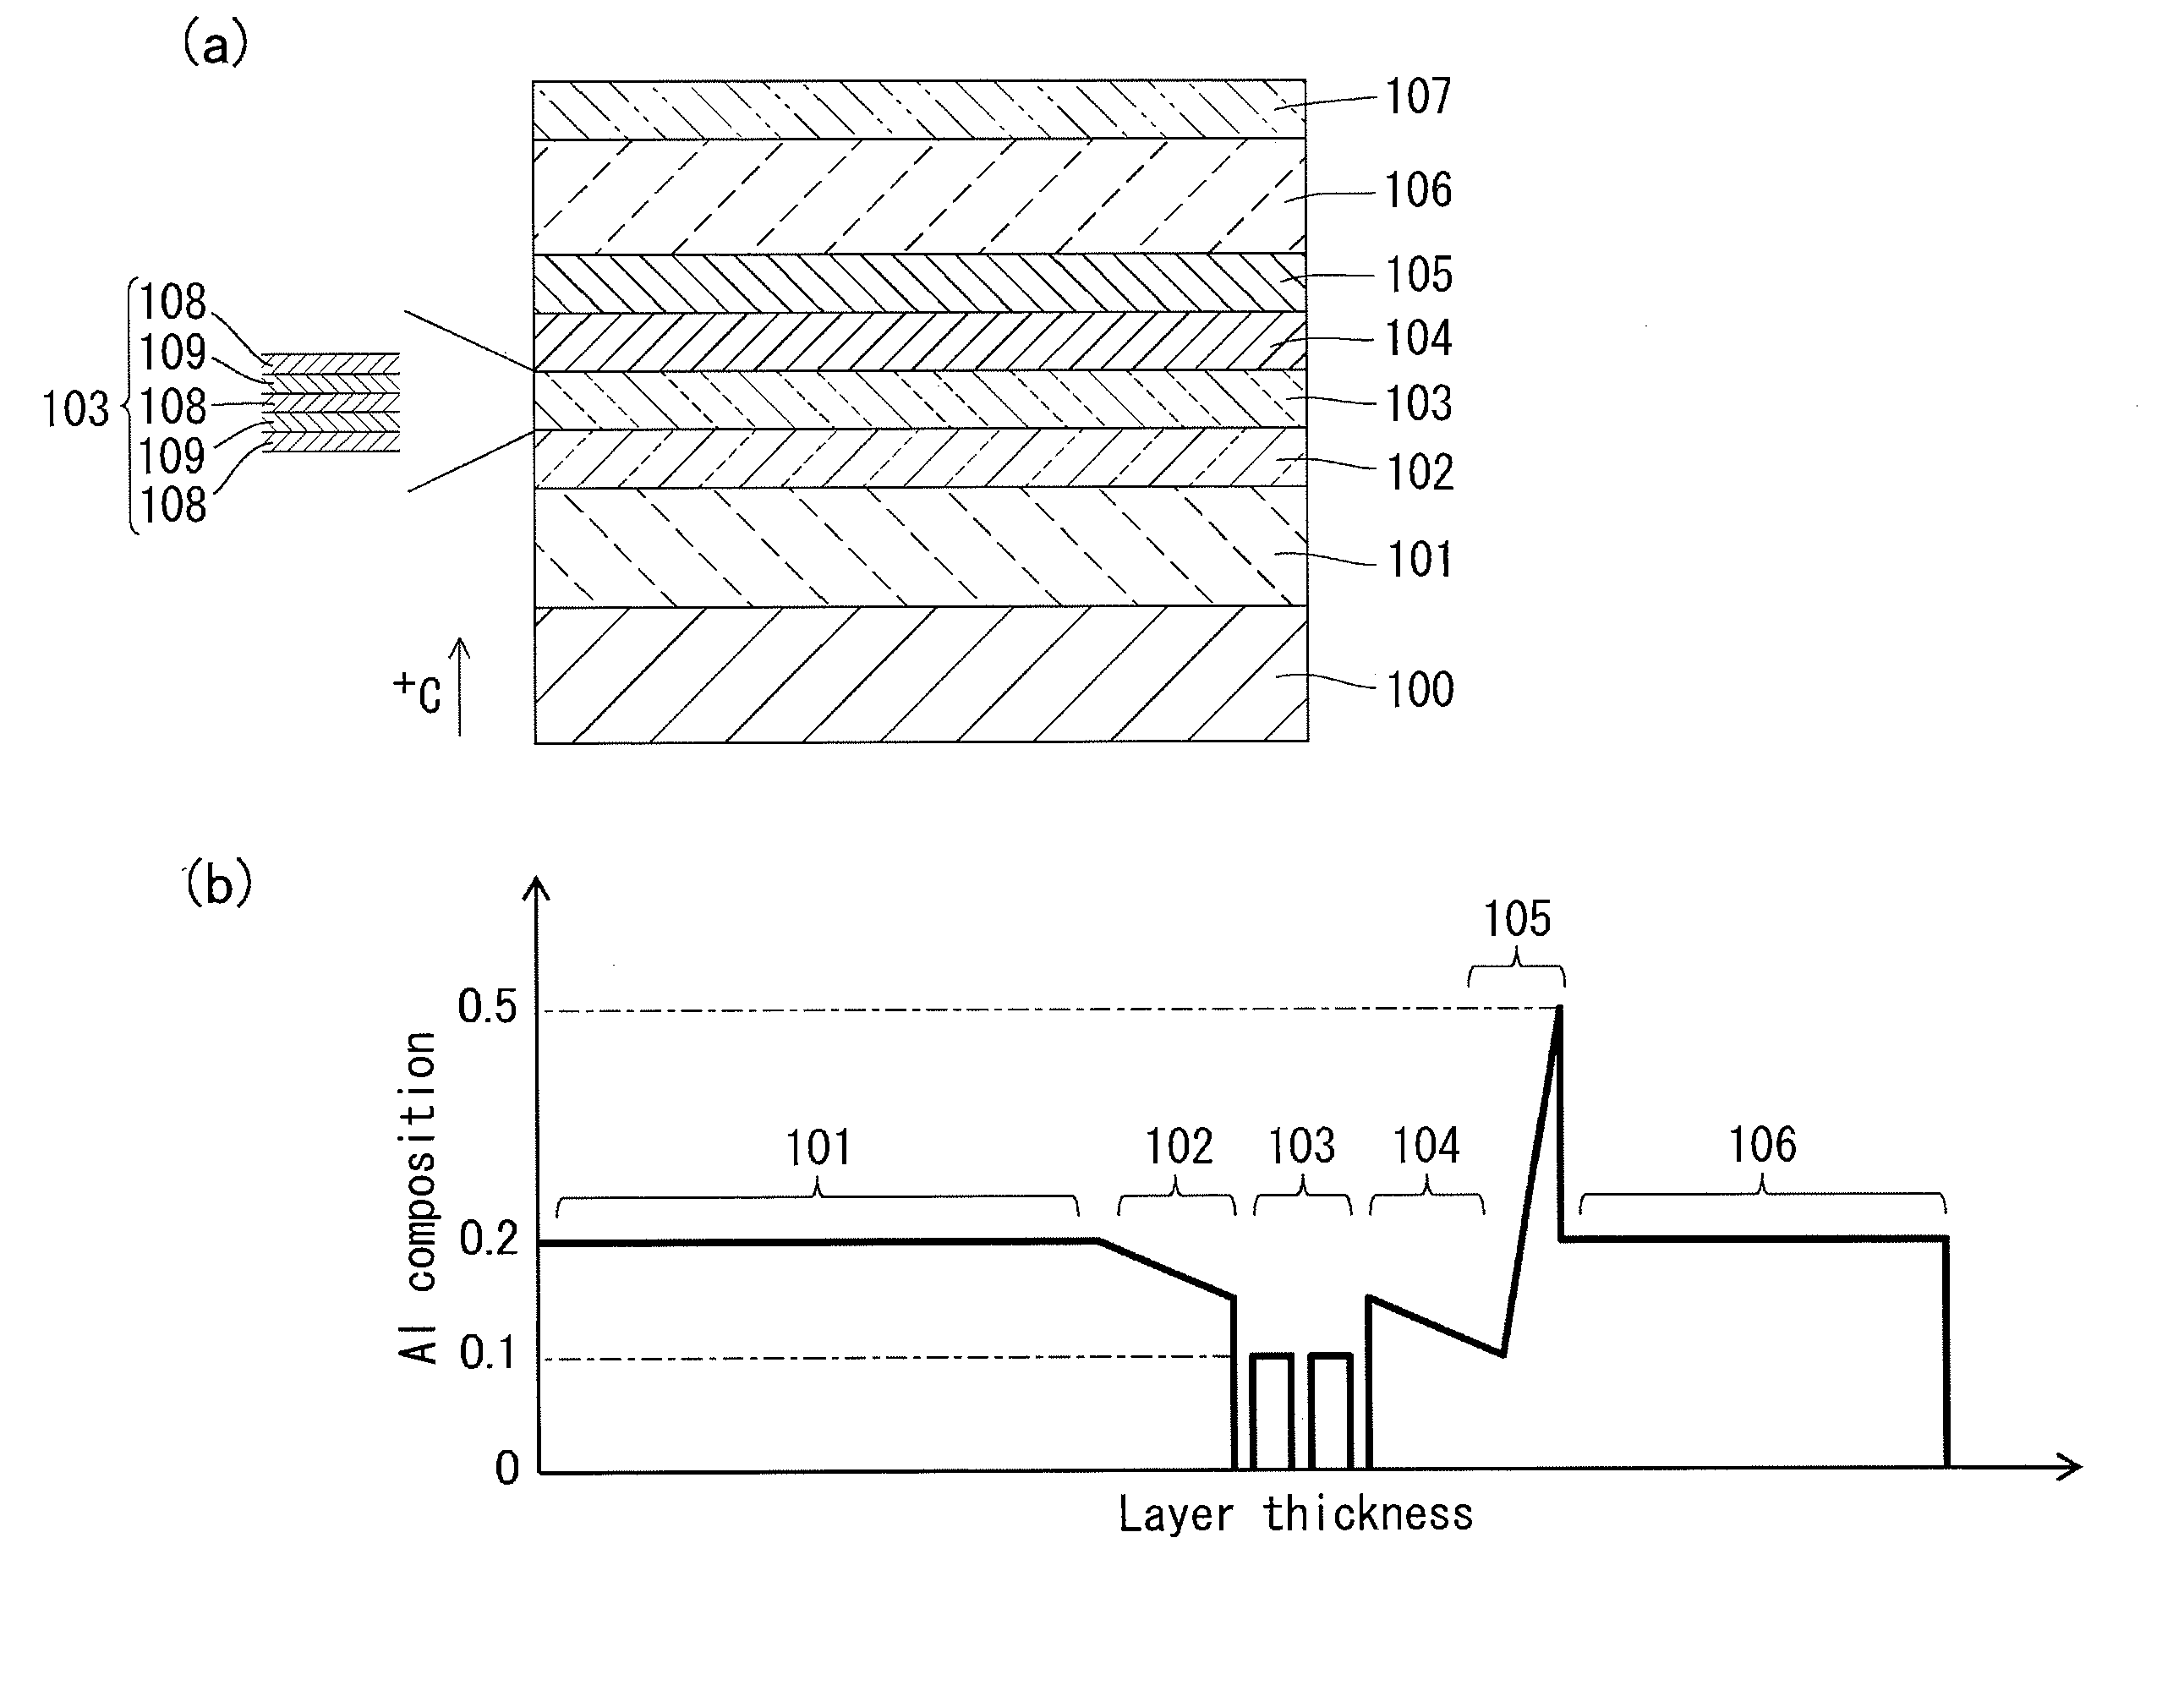 Nitride semiconductor light-emitting device